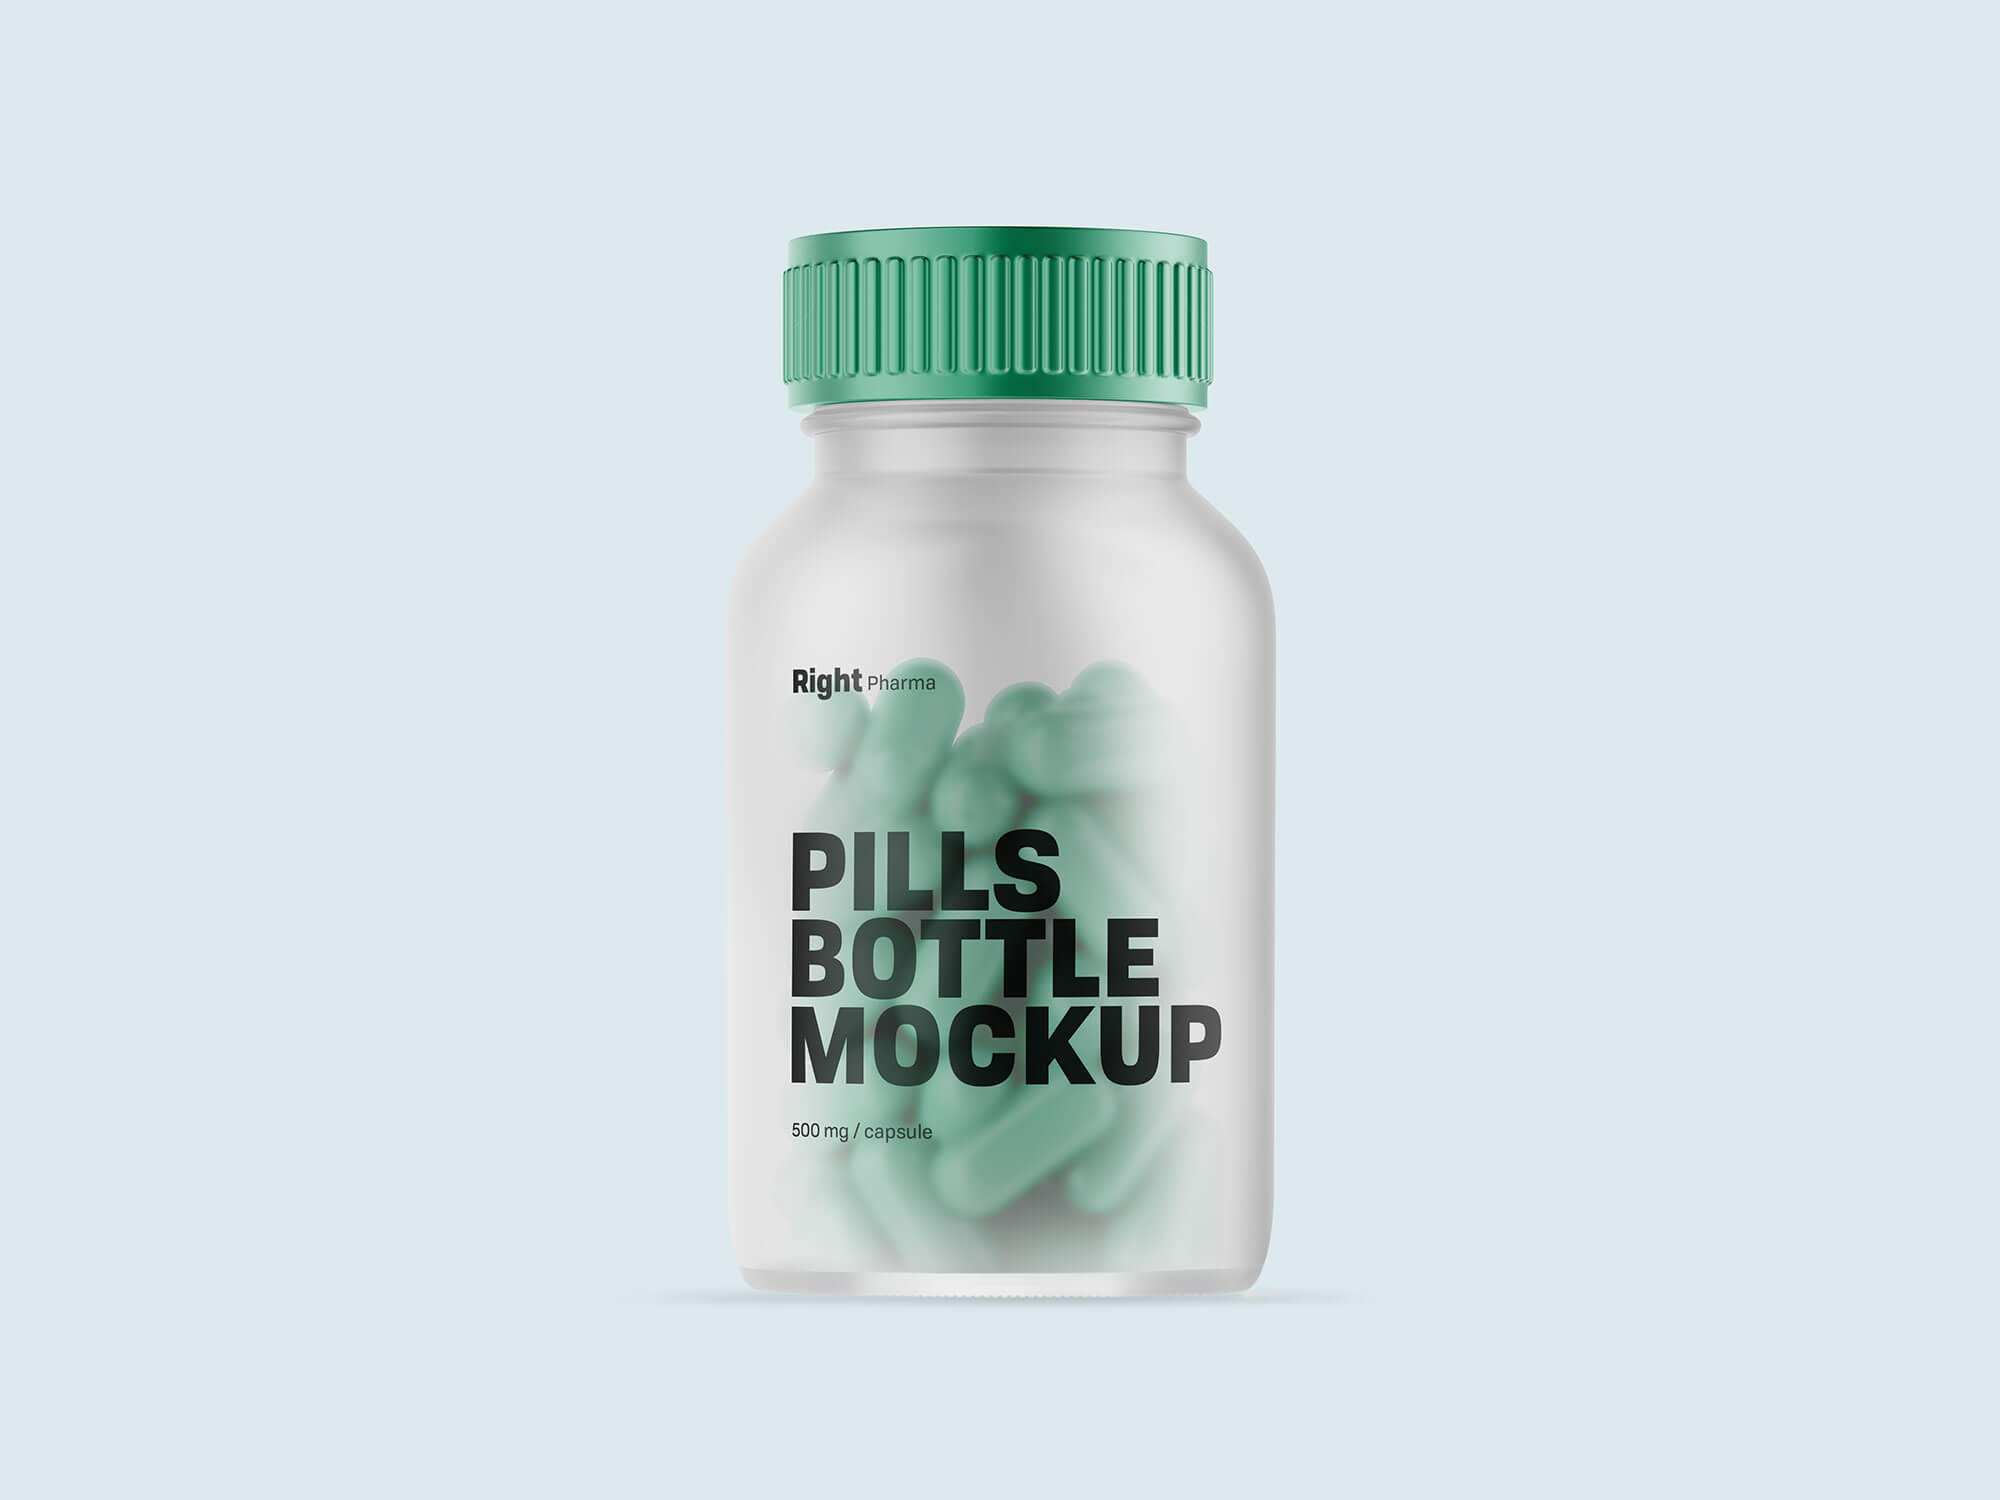 Pilules Bottle Mockup